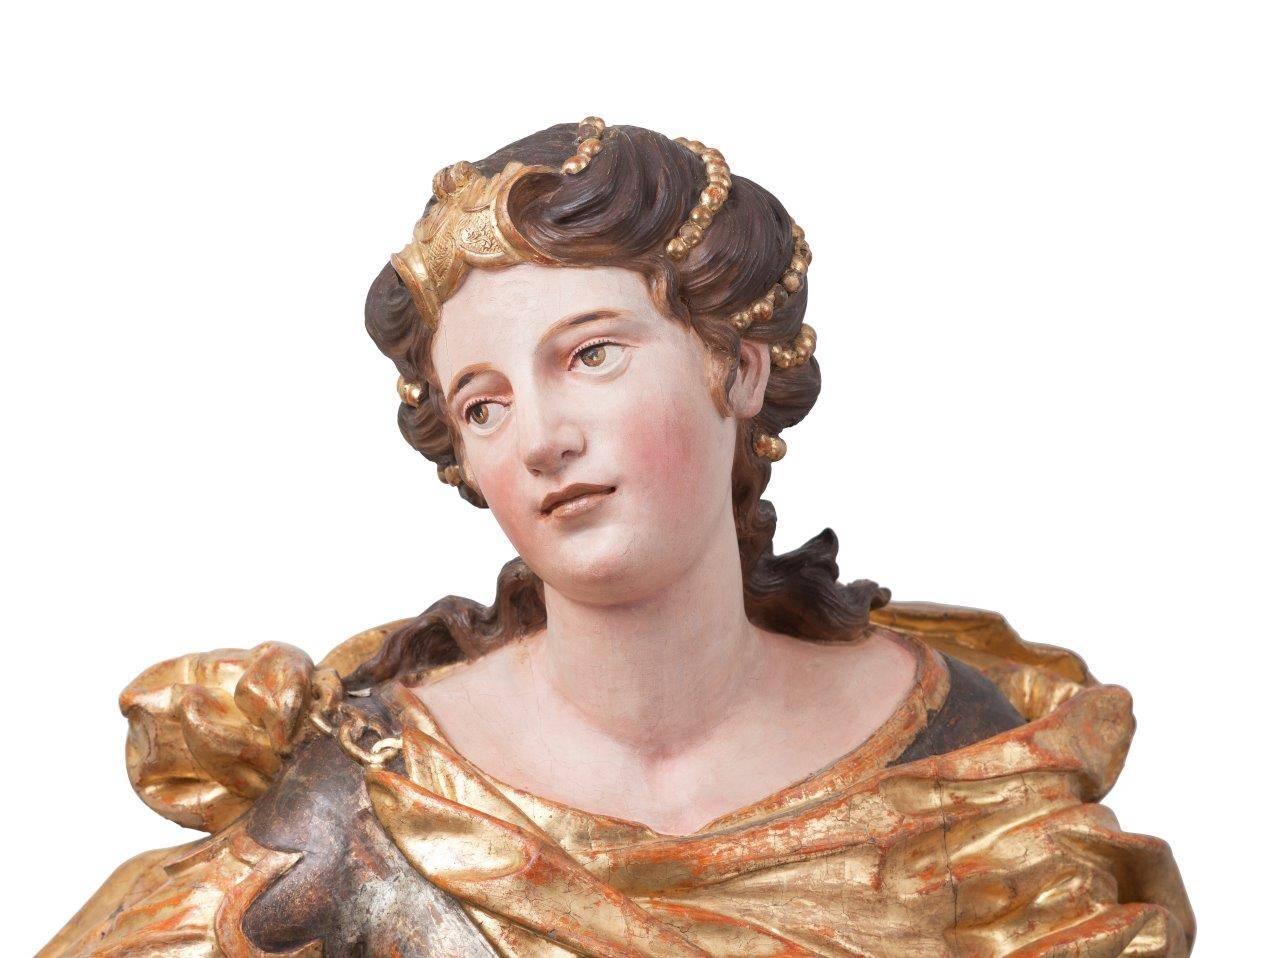 Pair of lifesize Princesses, Italian, Baroque, Sculptures - Brown Figurative Sculpture by Andrea Brustolon